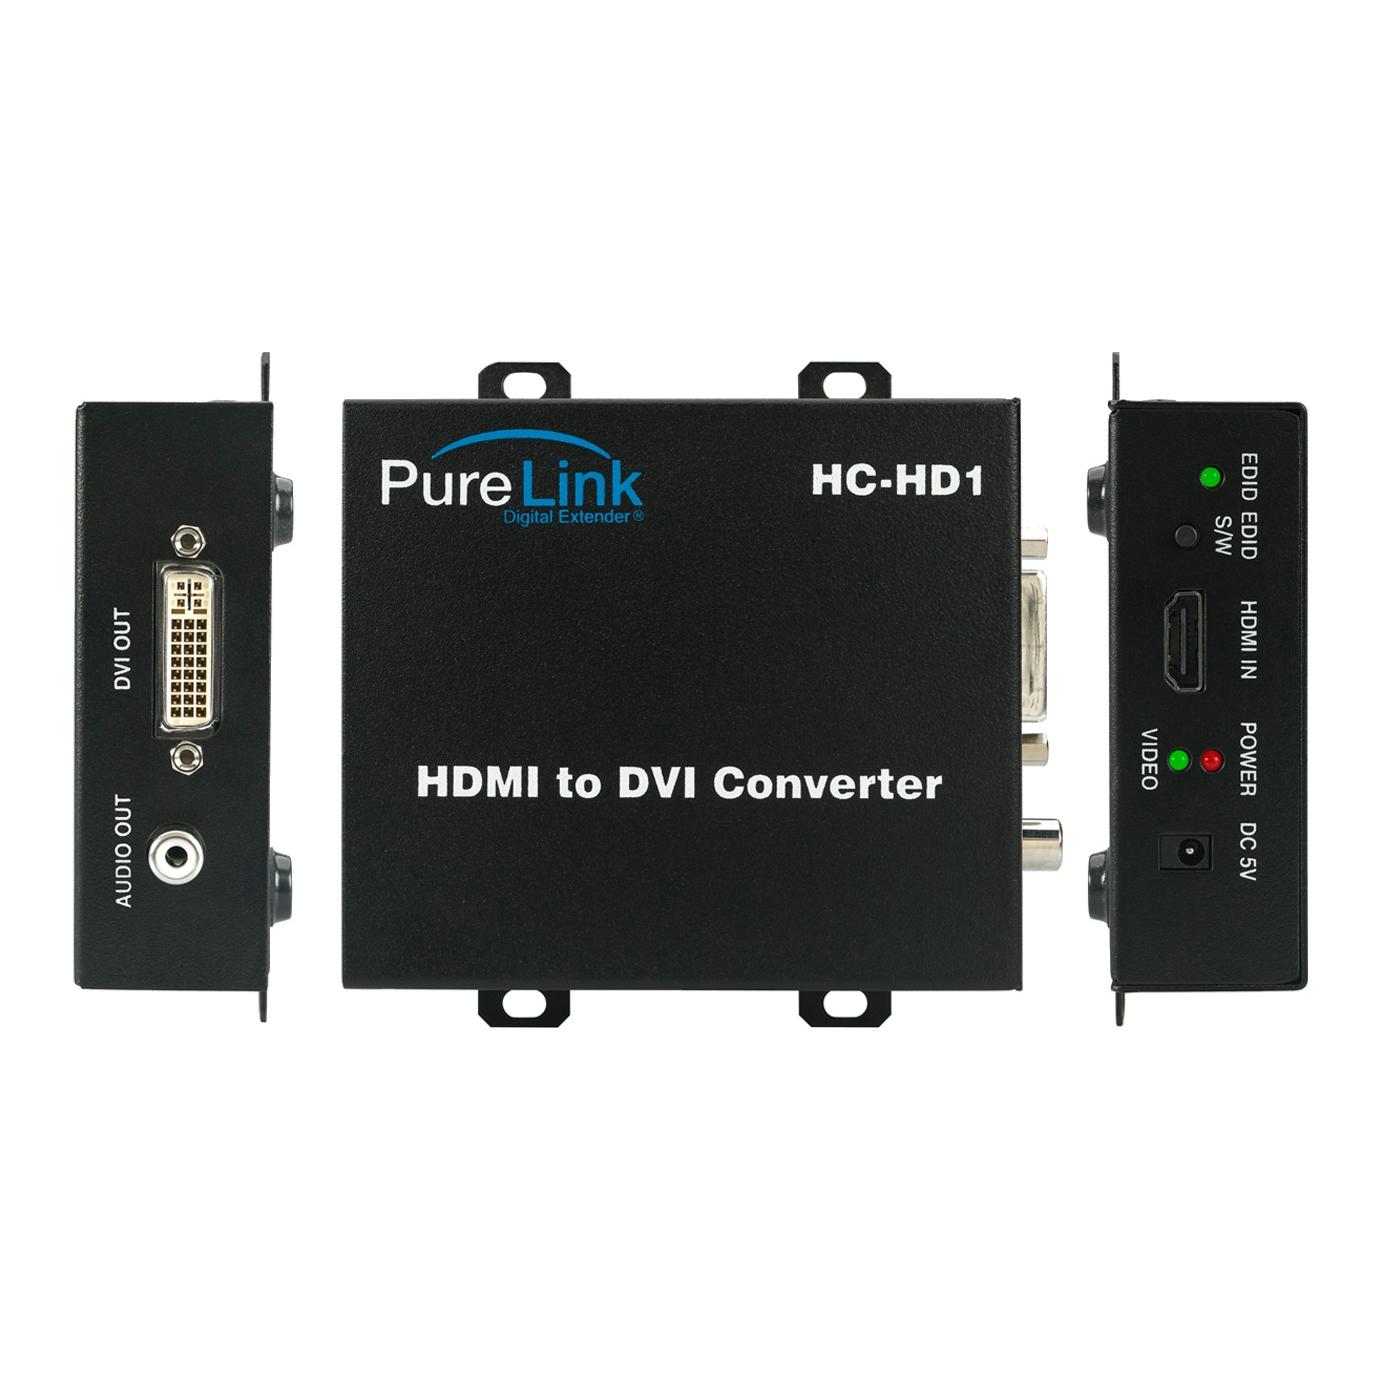 Pure link HC-HD1